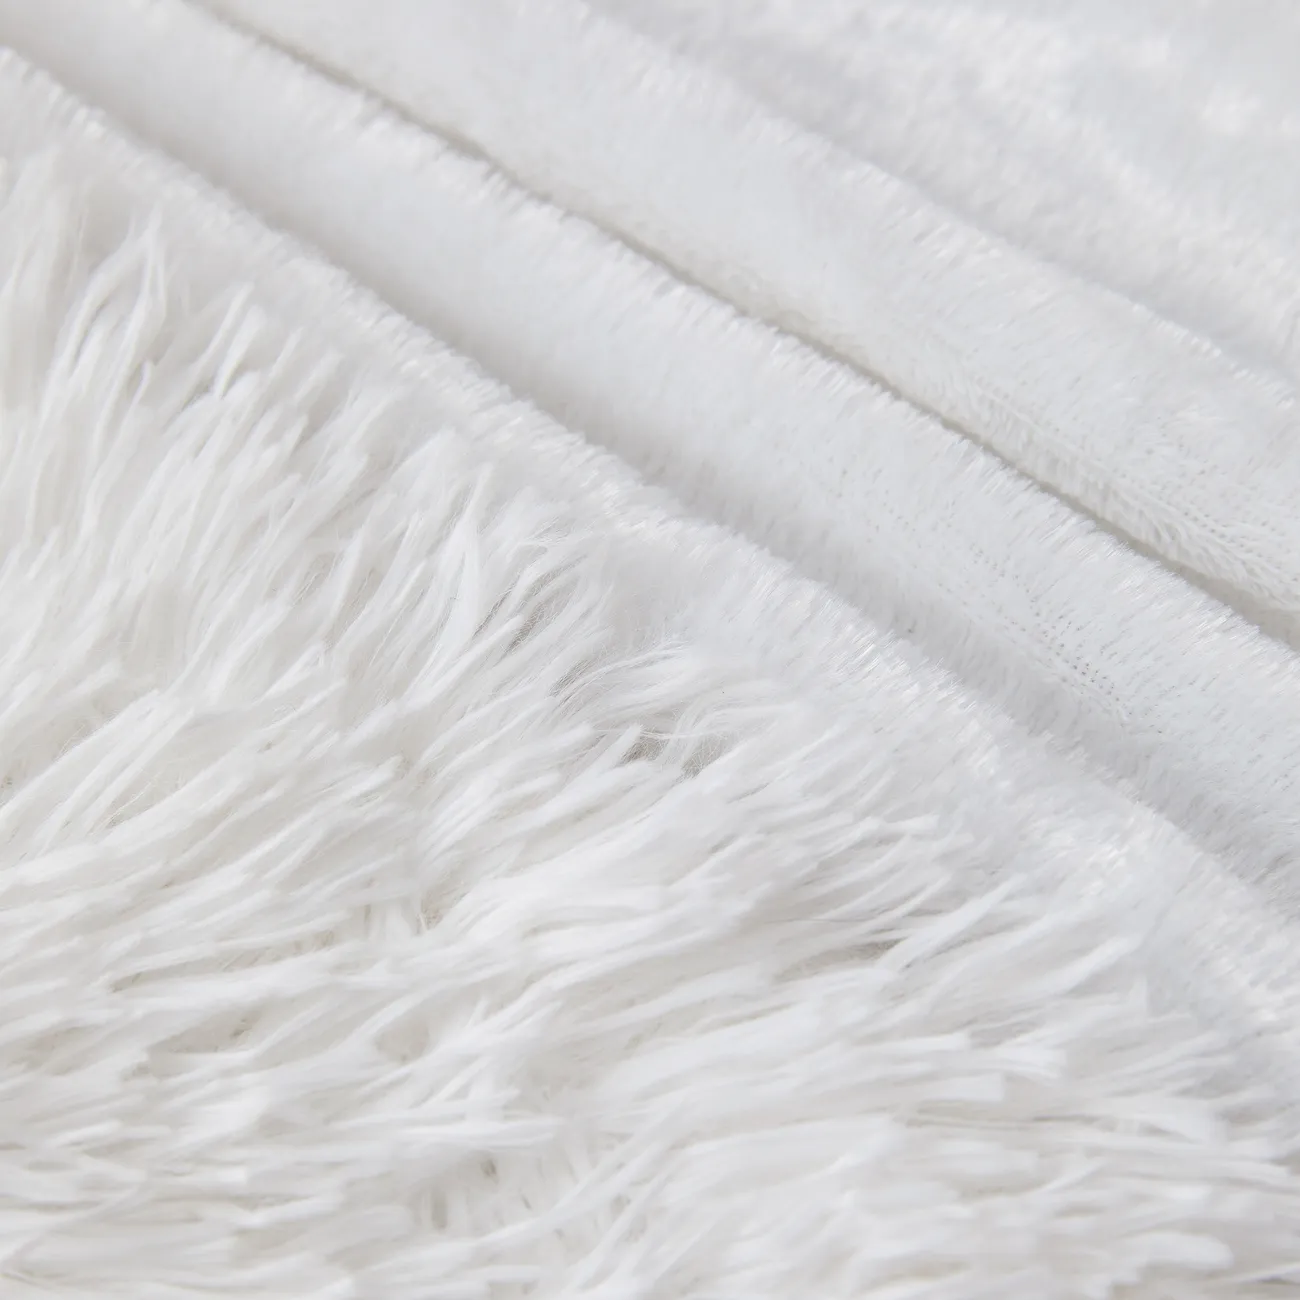 Premium White PV Fleece Blanket - Ultra-Soft, Durable, Machine-Washable - Perfect for Home Comfort and Stylish Decor White big image 1